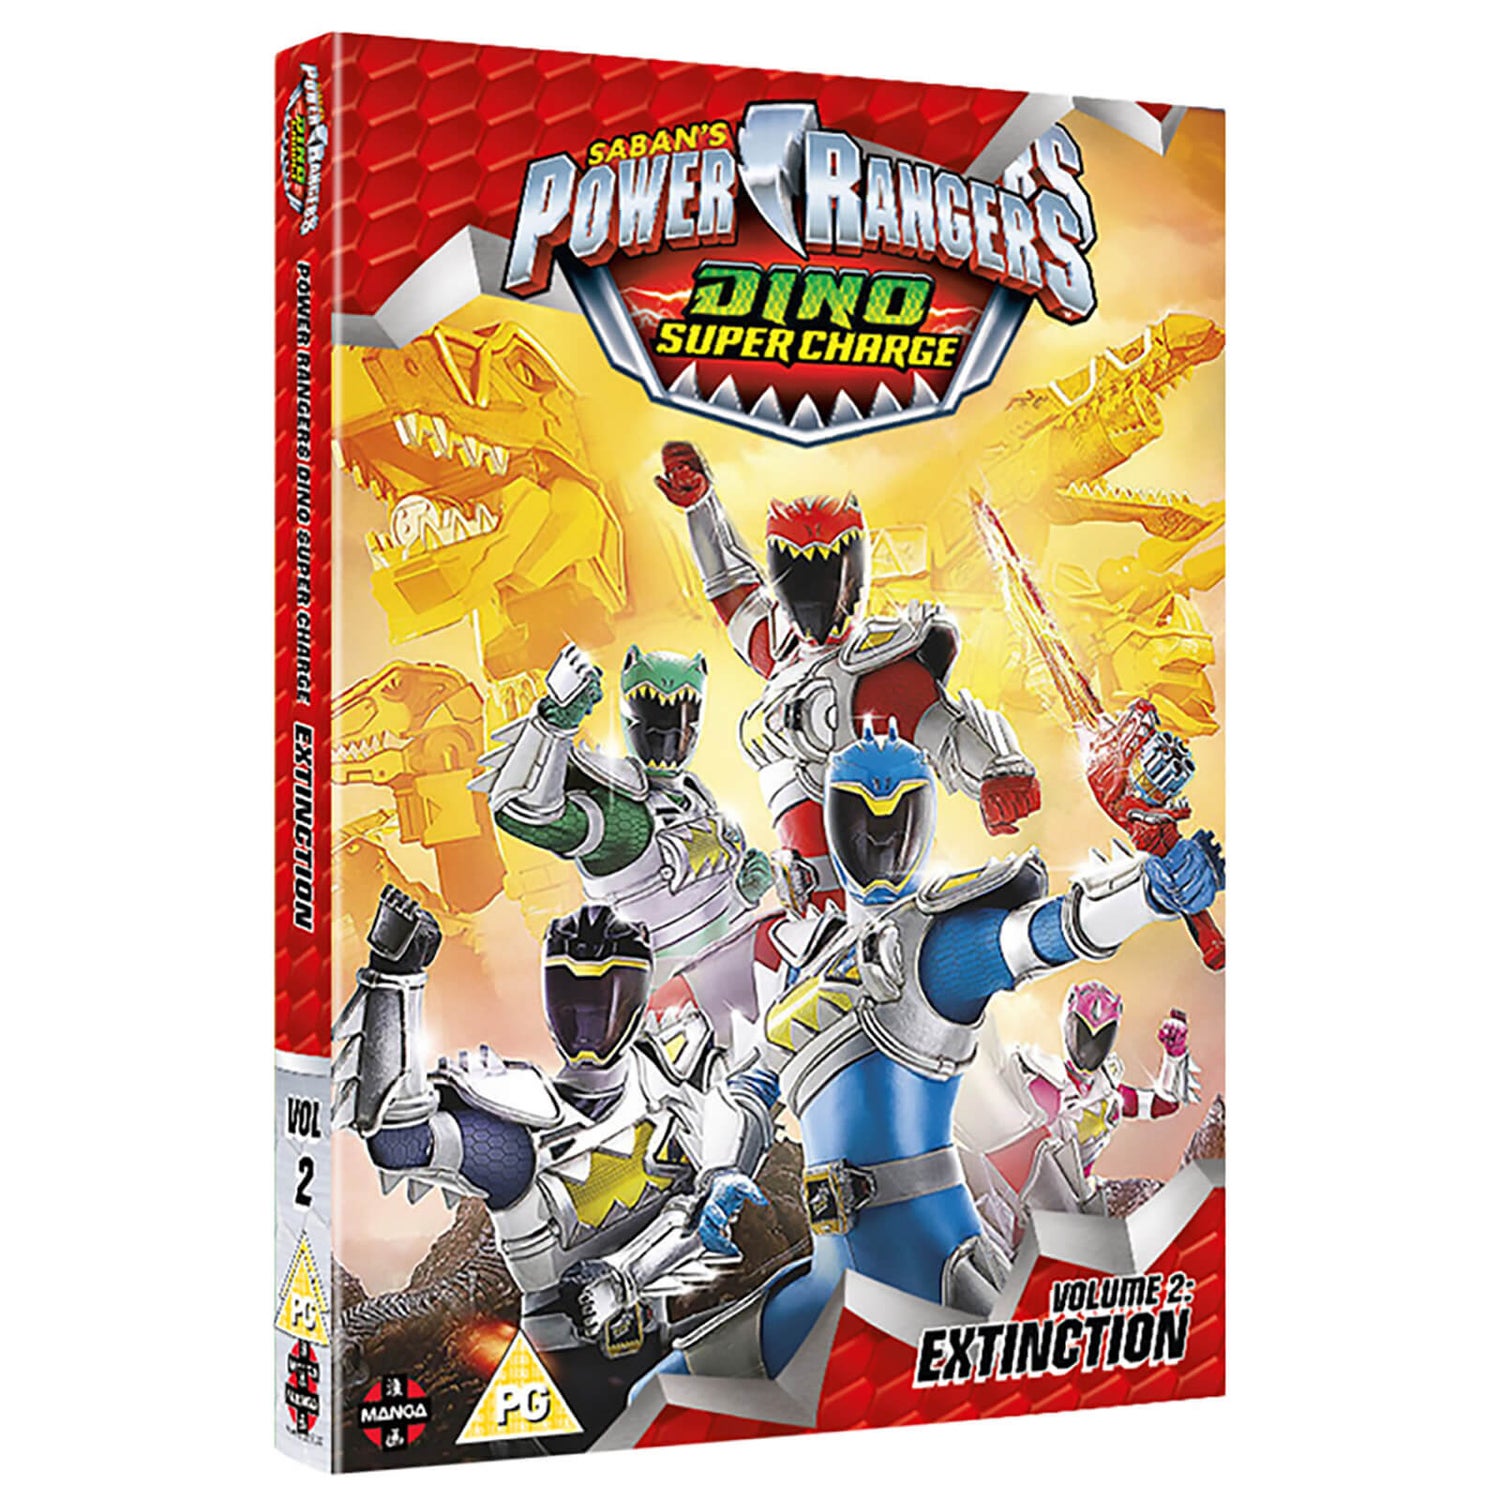 Power Rangers Dino Super Charge: Vol 2 - Extinction (Episoden 11-20)